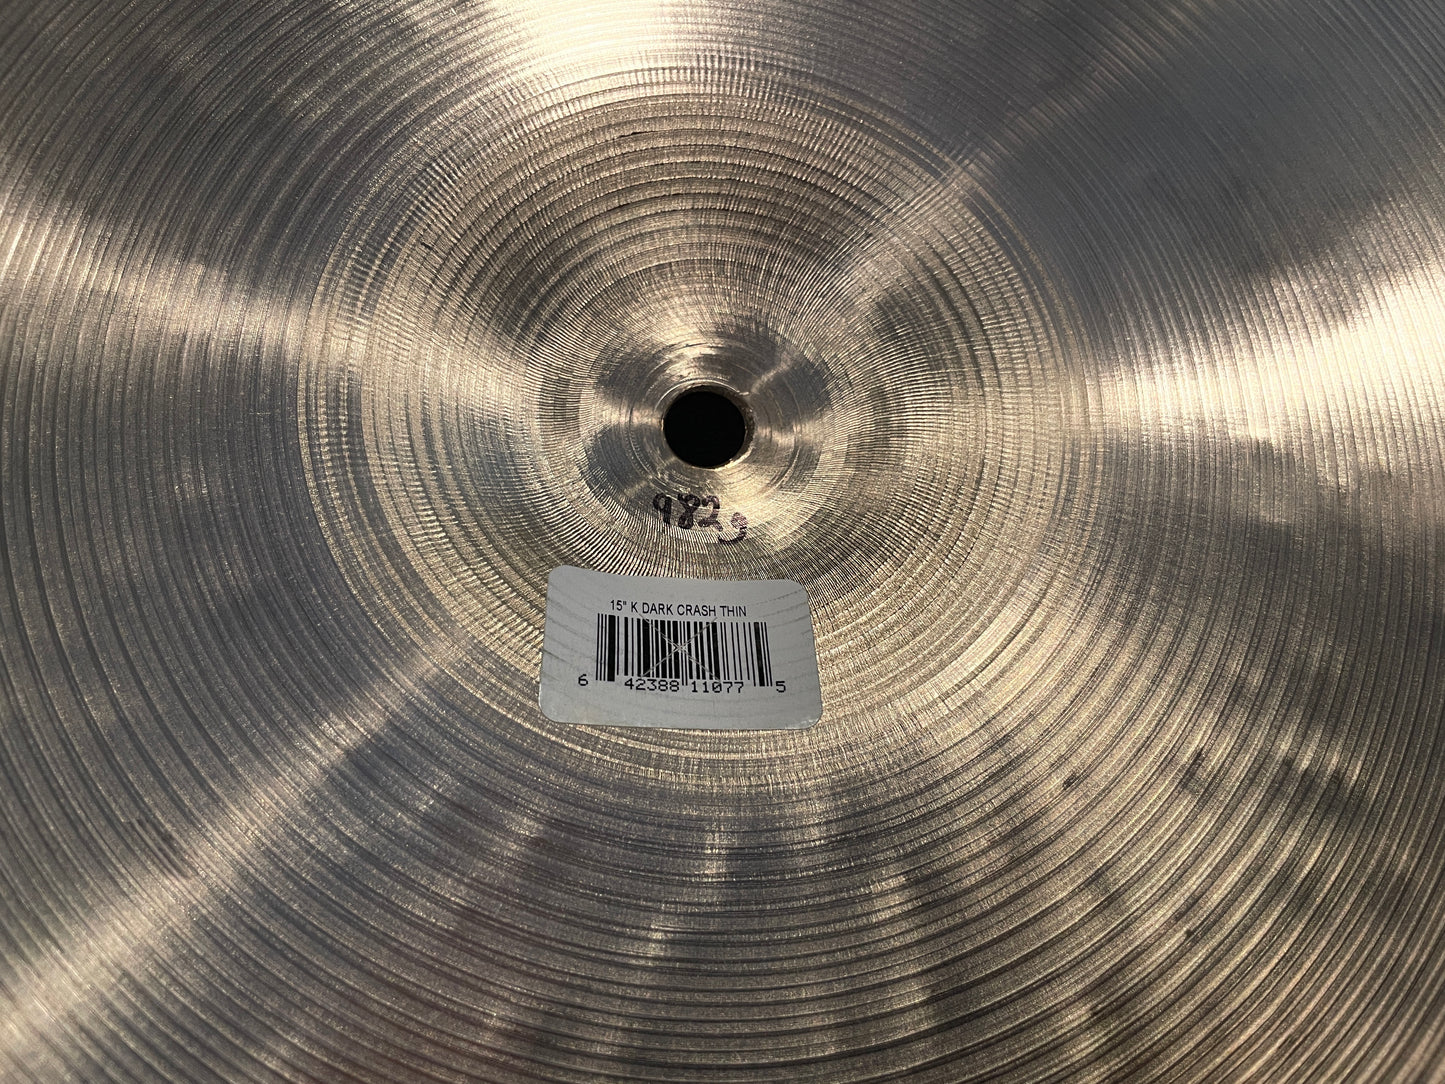 15" Zildjian K Dark Crash Thin Cymbal 982g